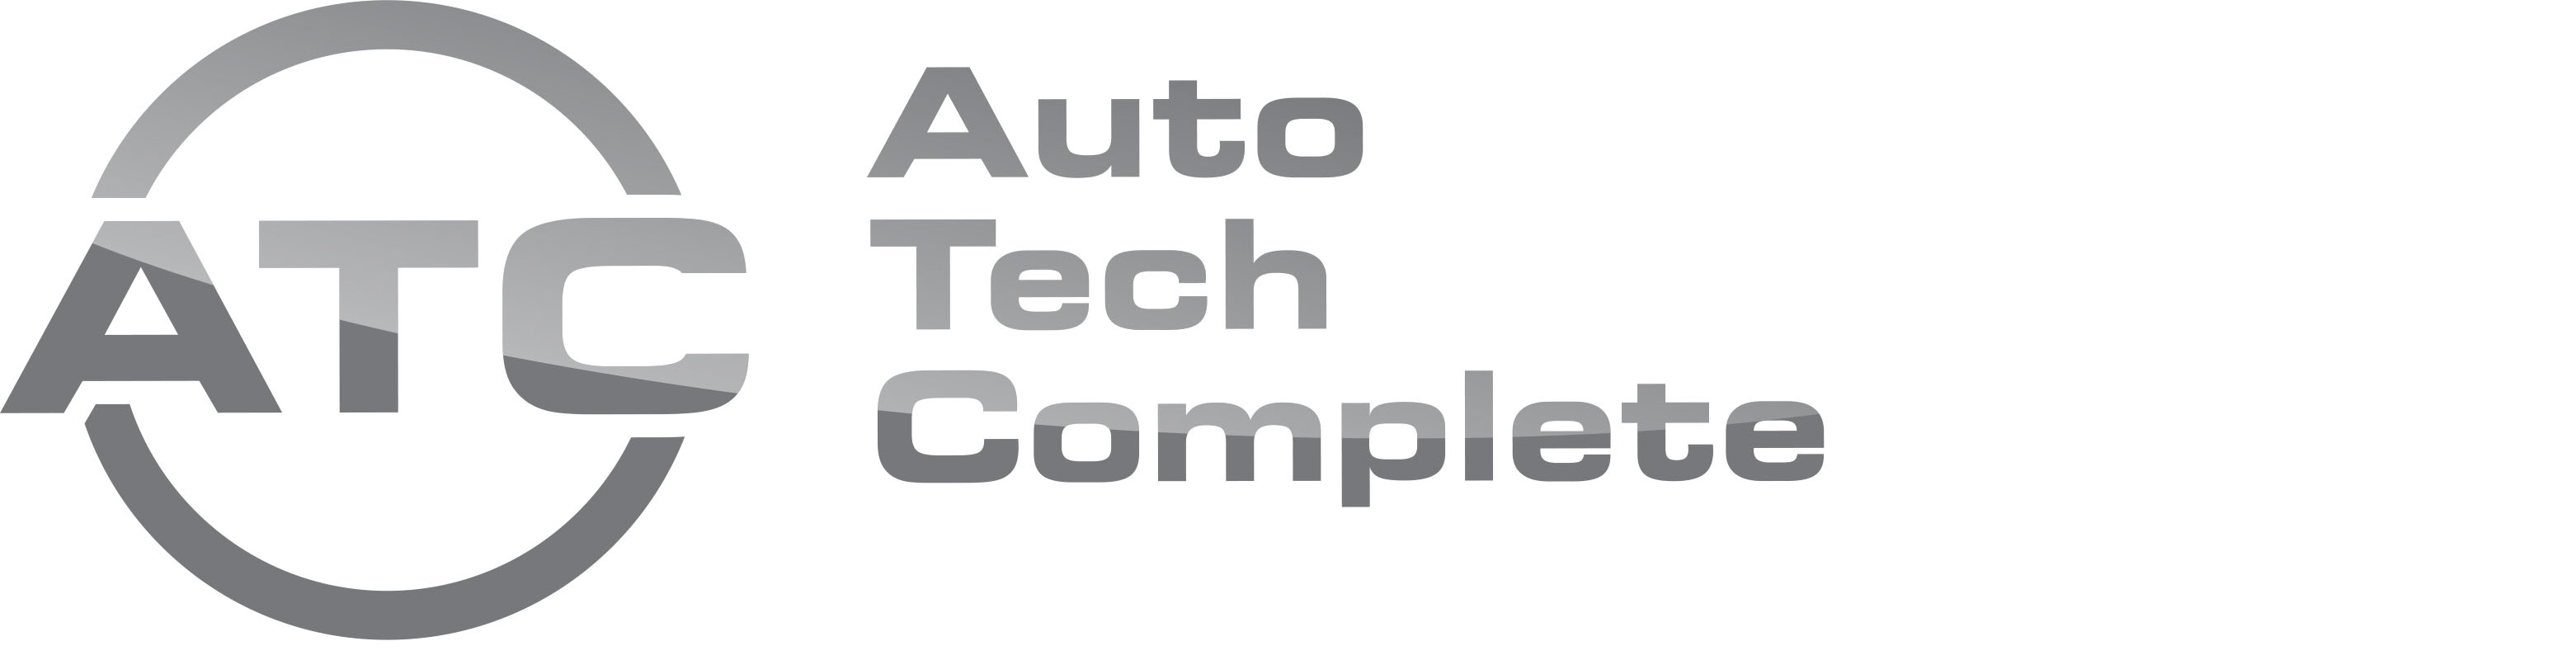  Auto Tech Complete 